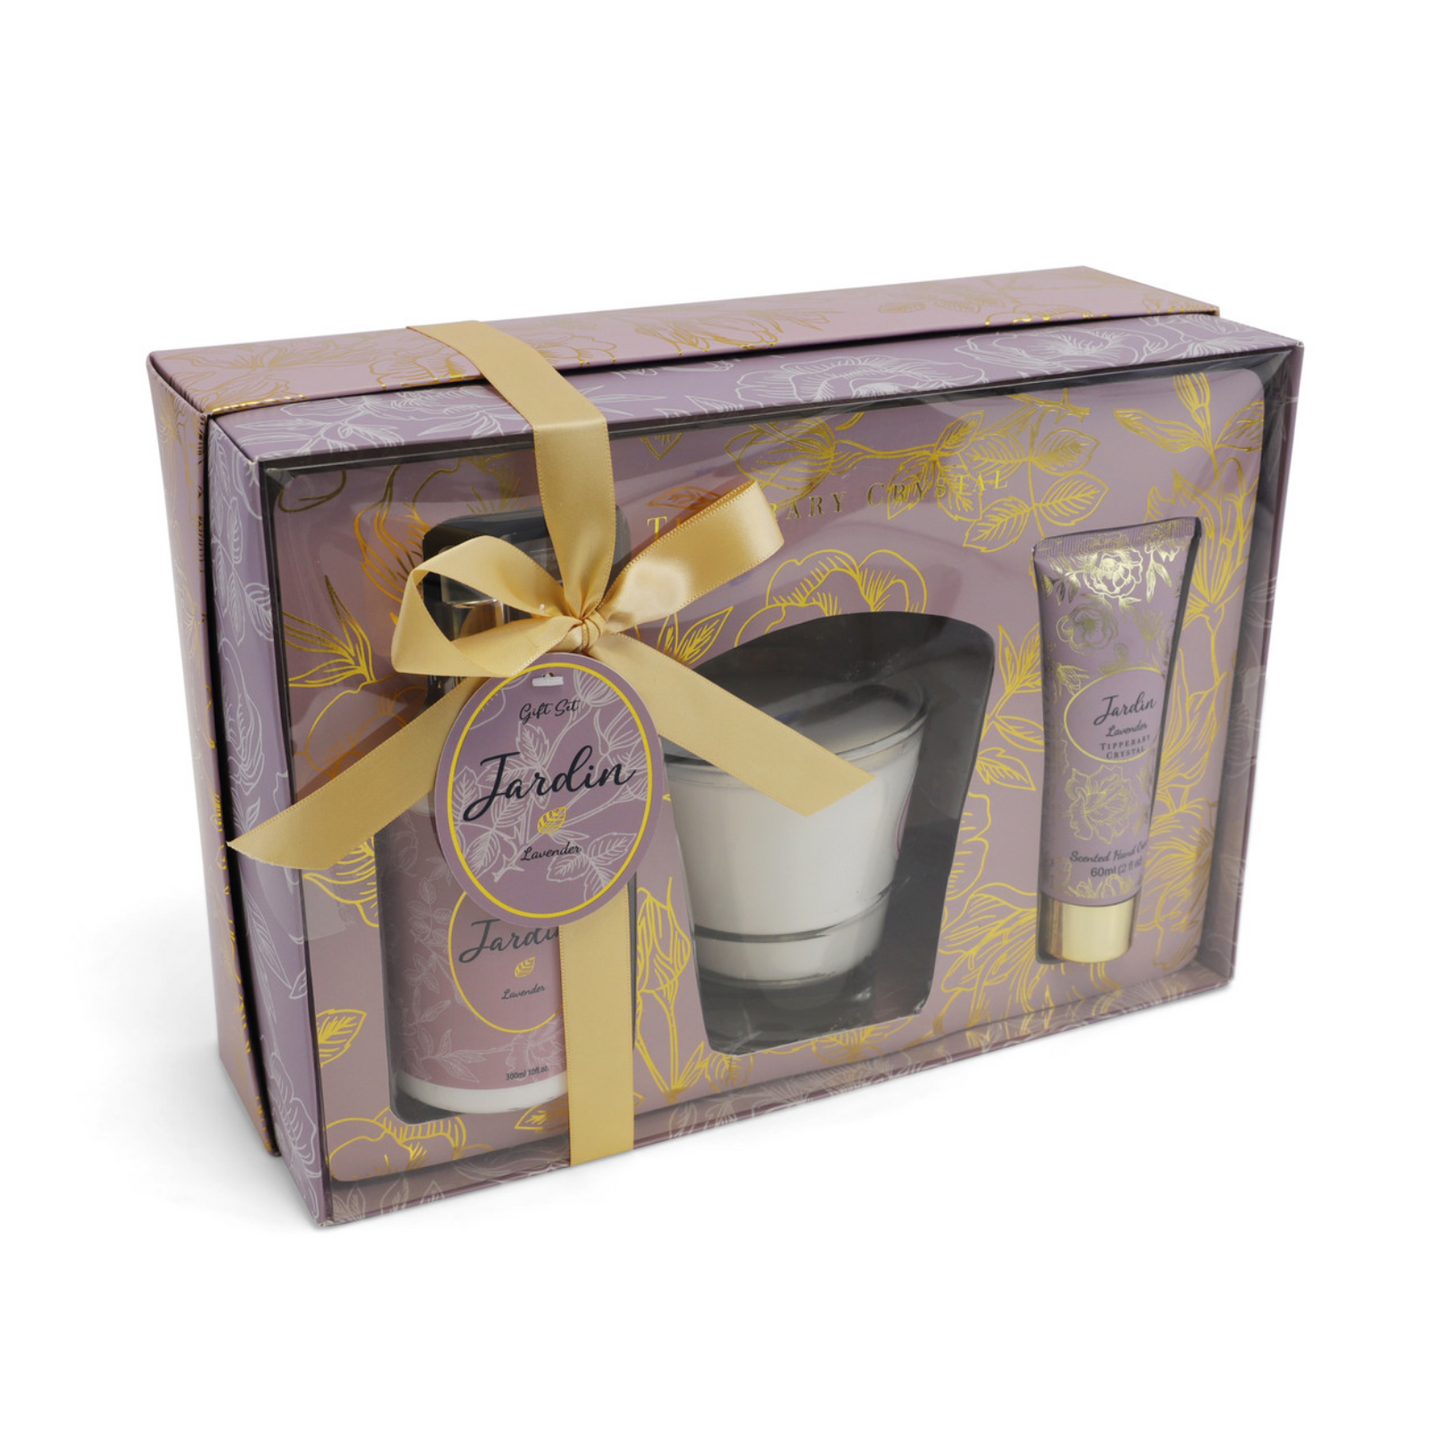 Jardin Lavender Candle and Handcream Tube & Pump Gift Set